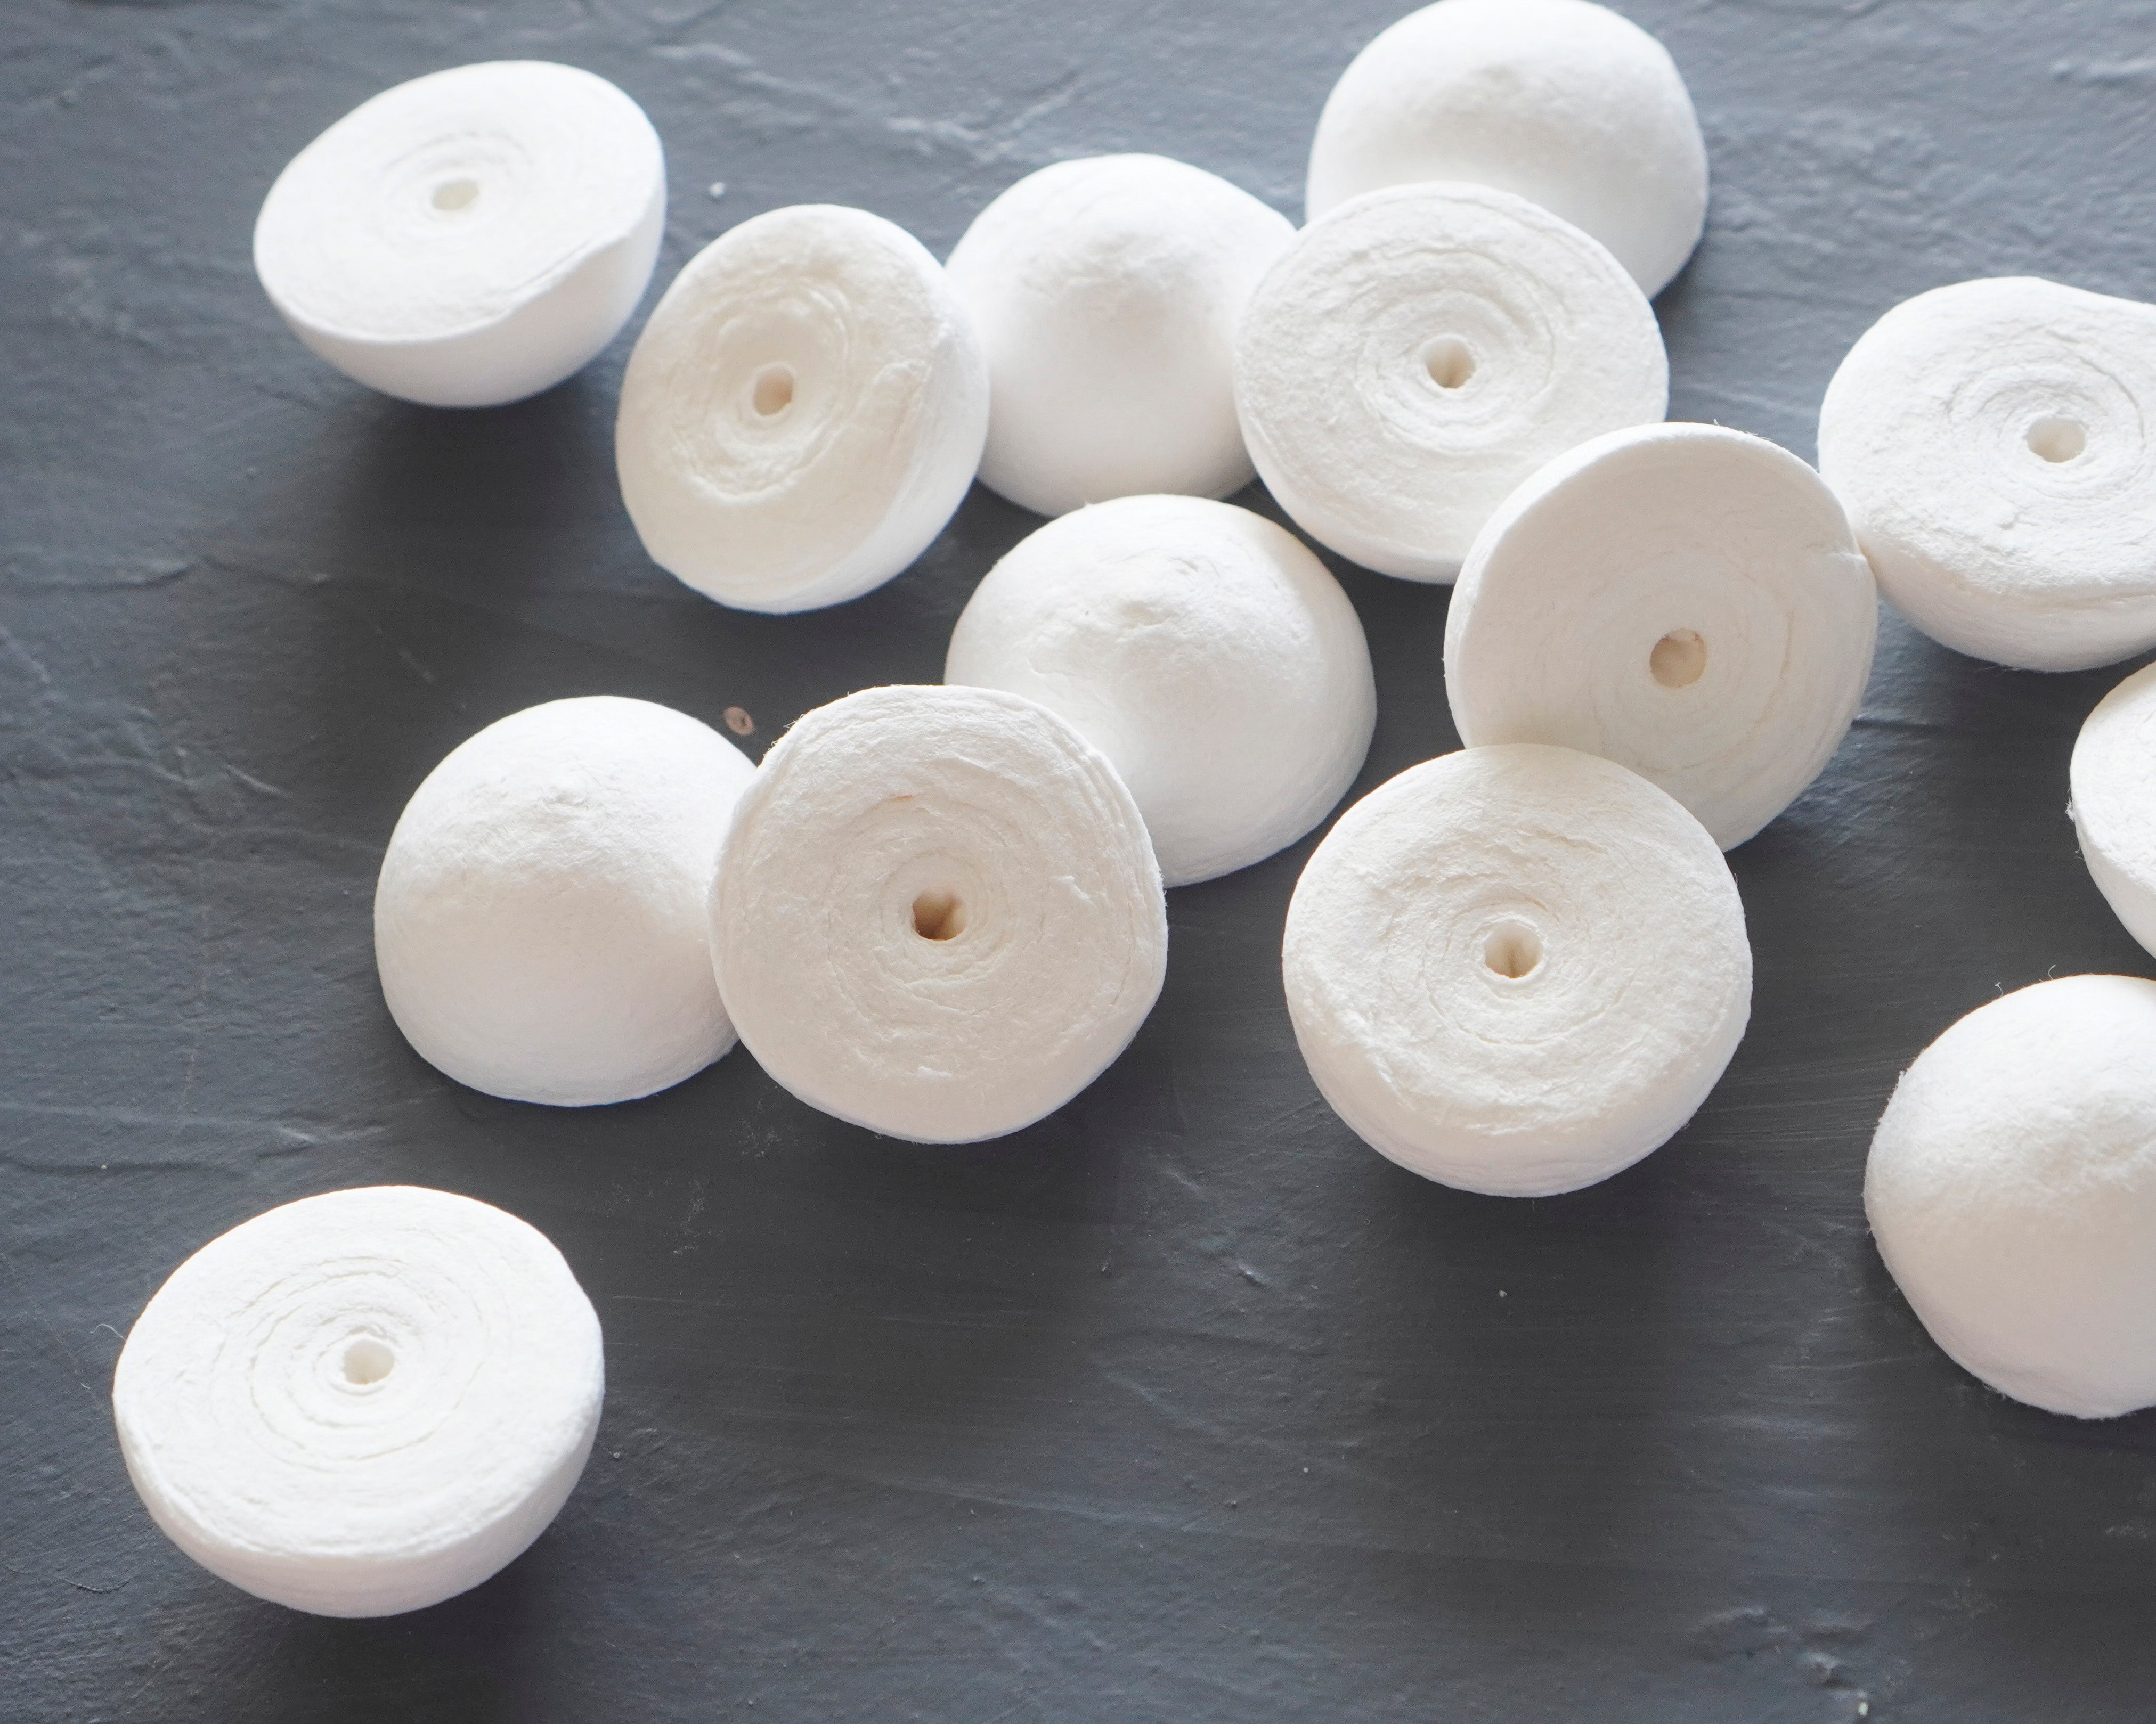 Spun Cotton Balls: 12mm Paper Ball Craft Shapes, 100 Pcs.